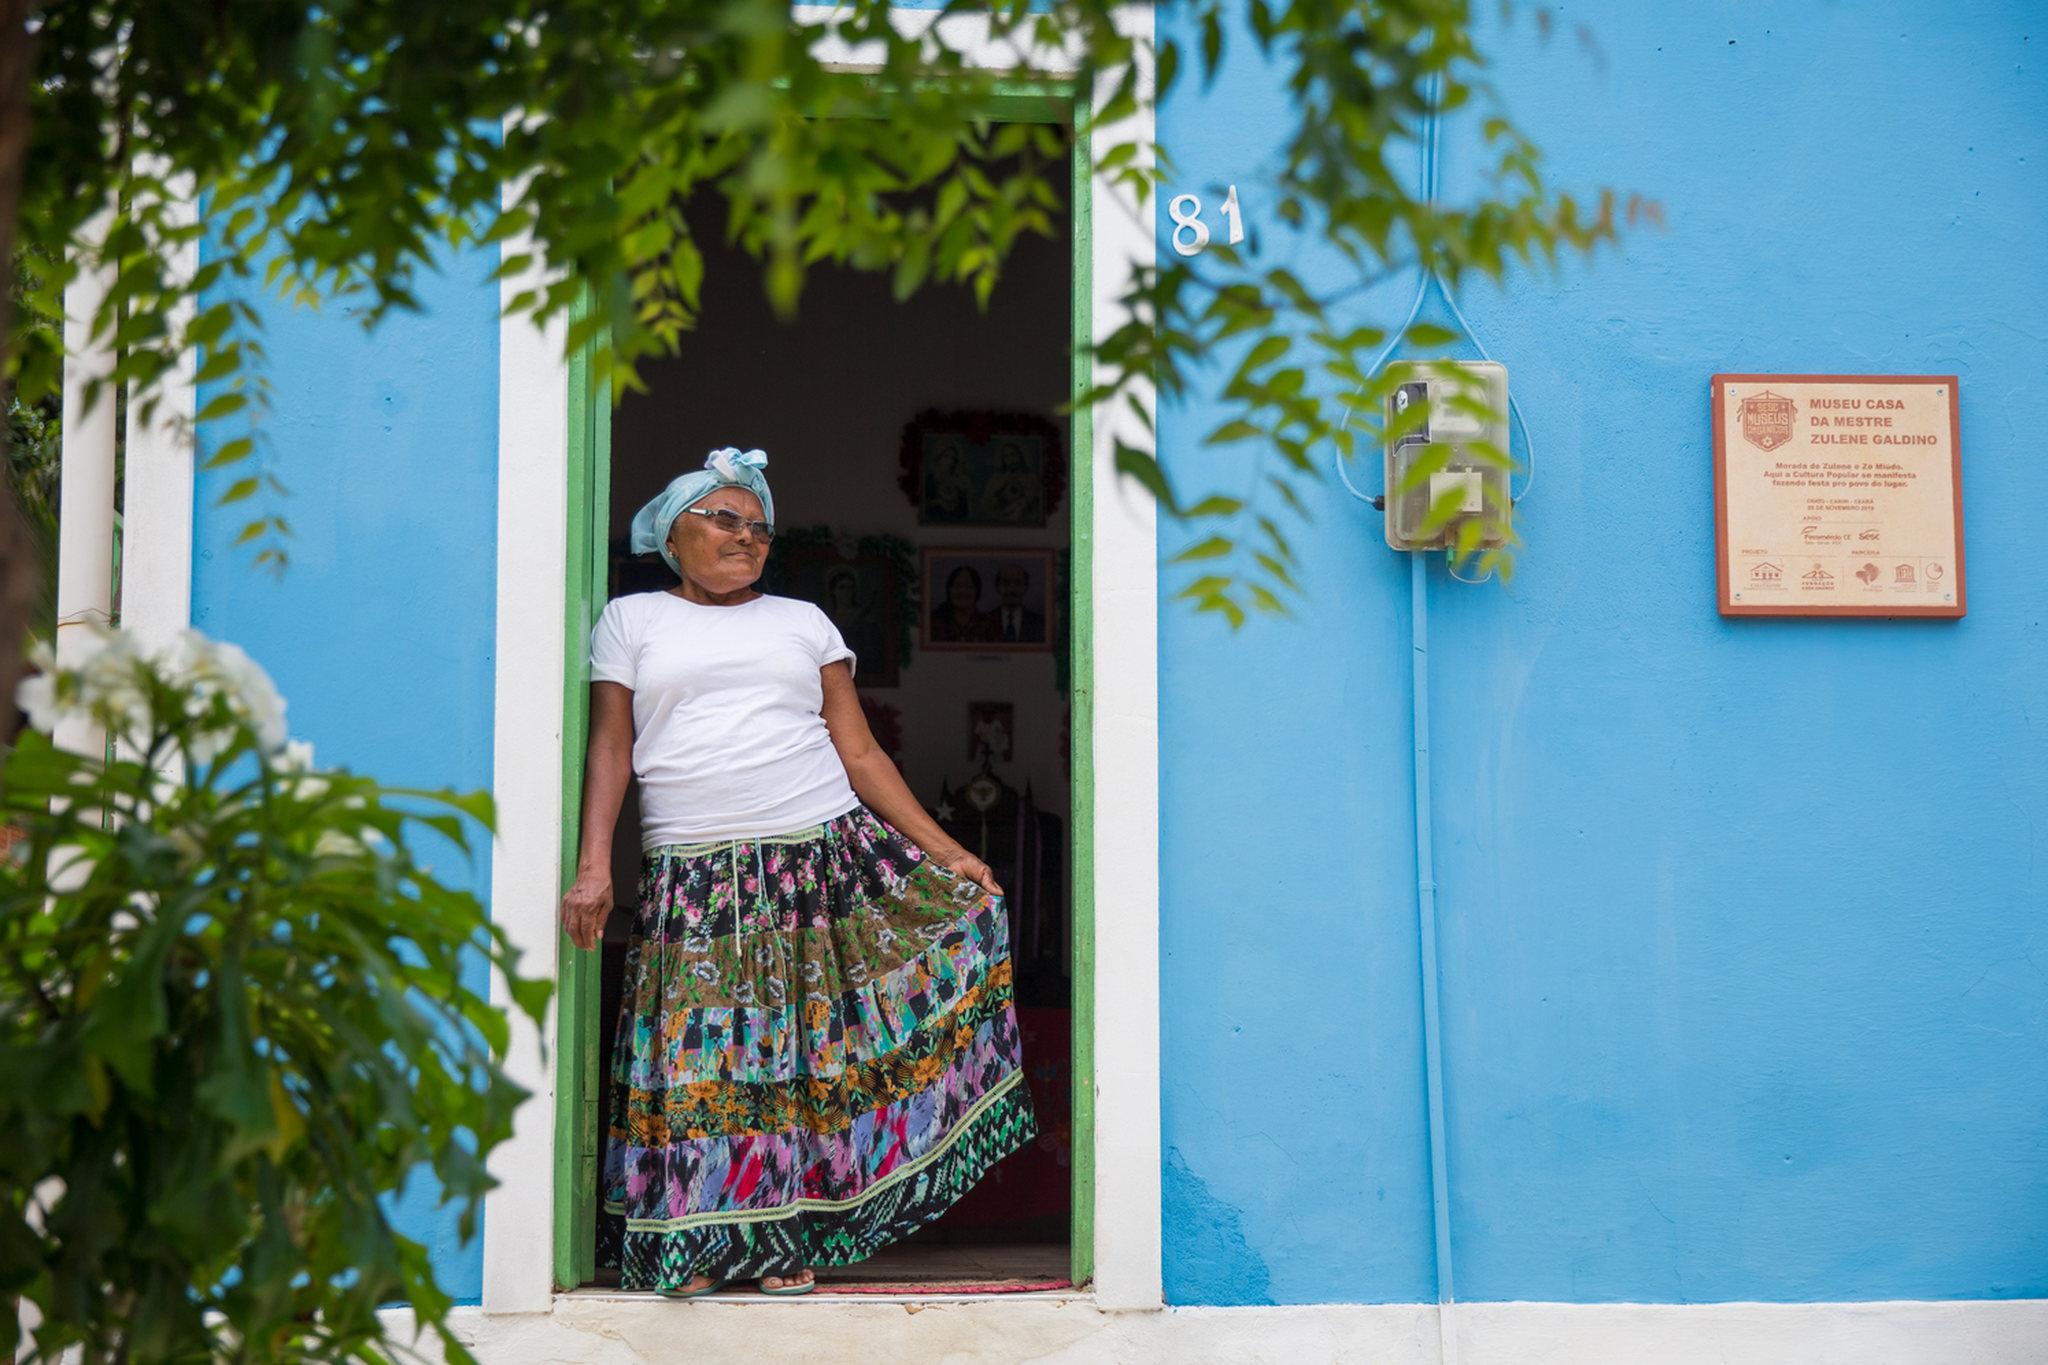 mestra zulene na porta da sua casa museu